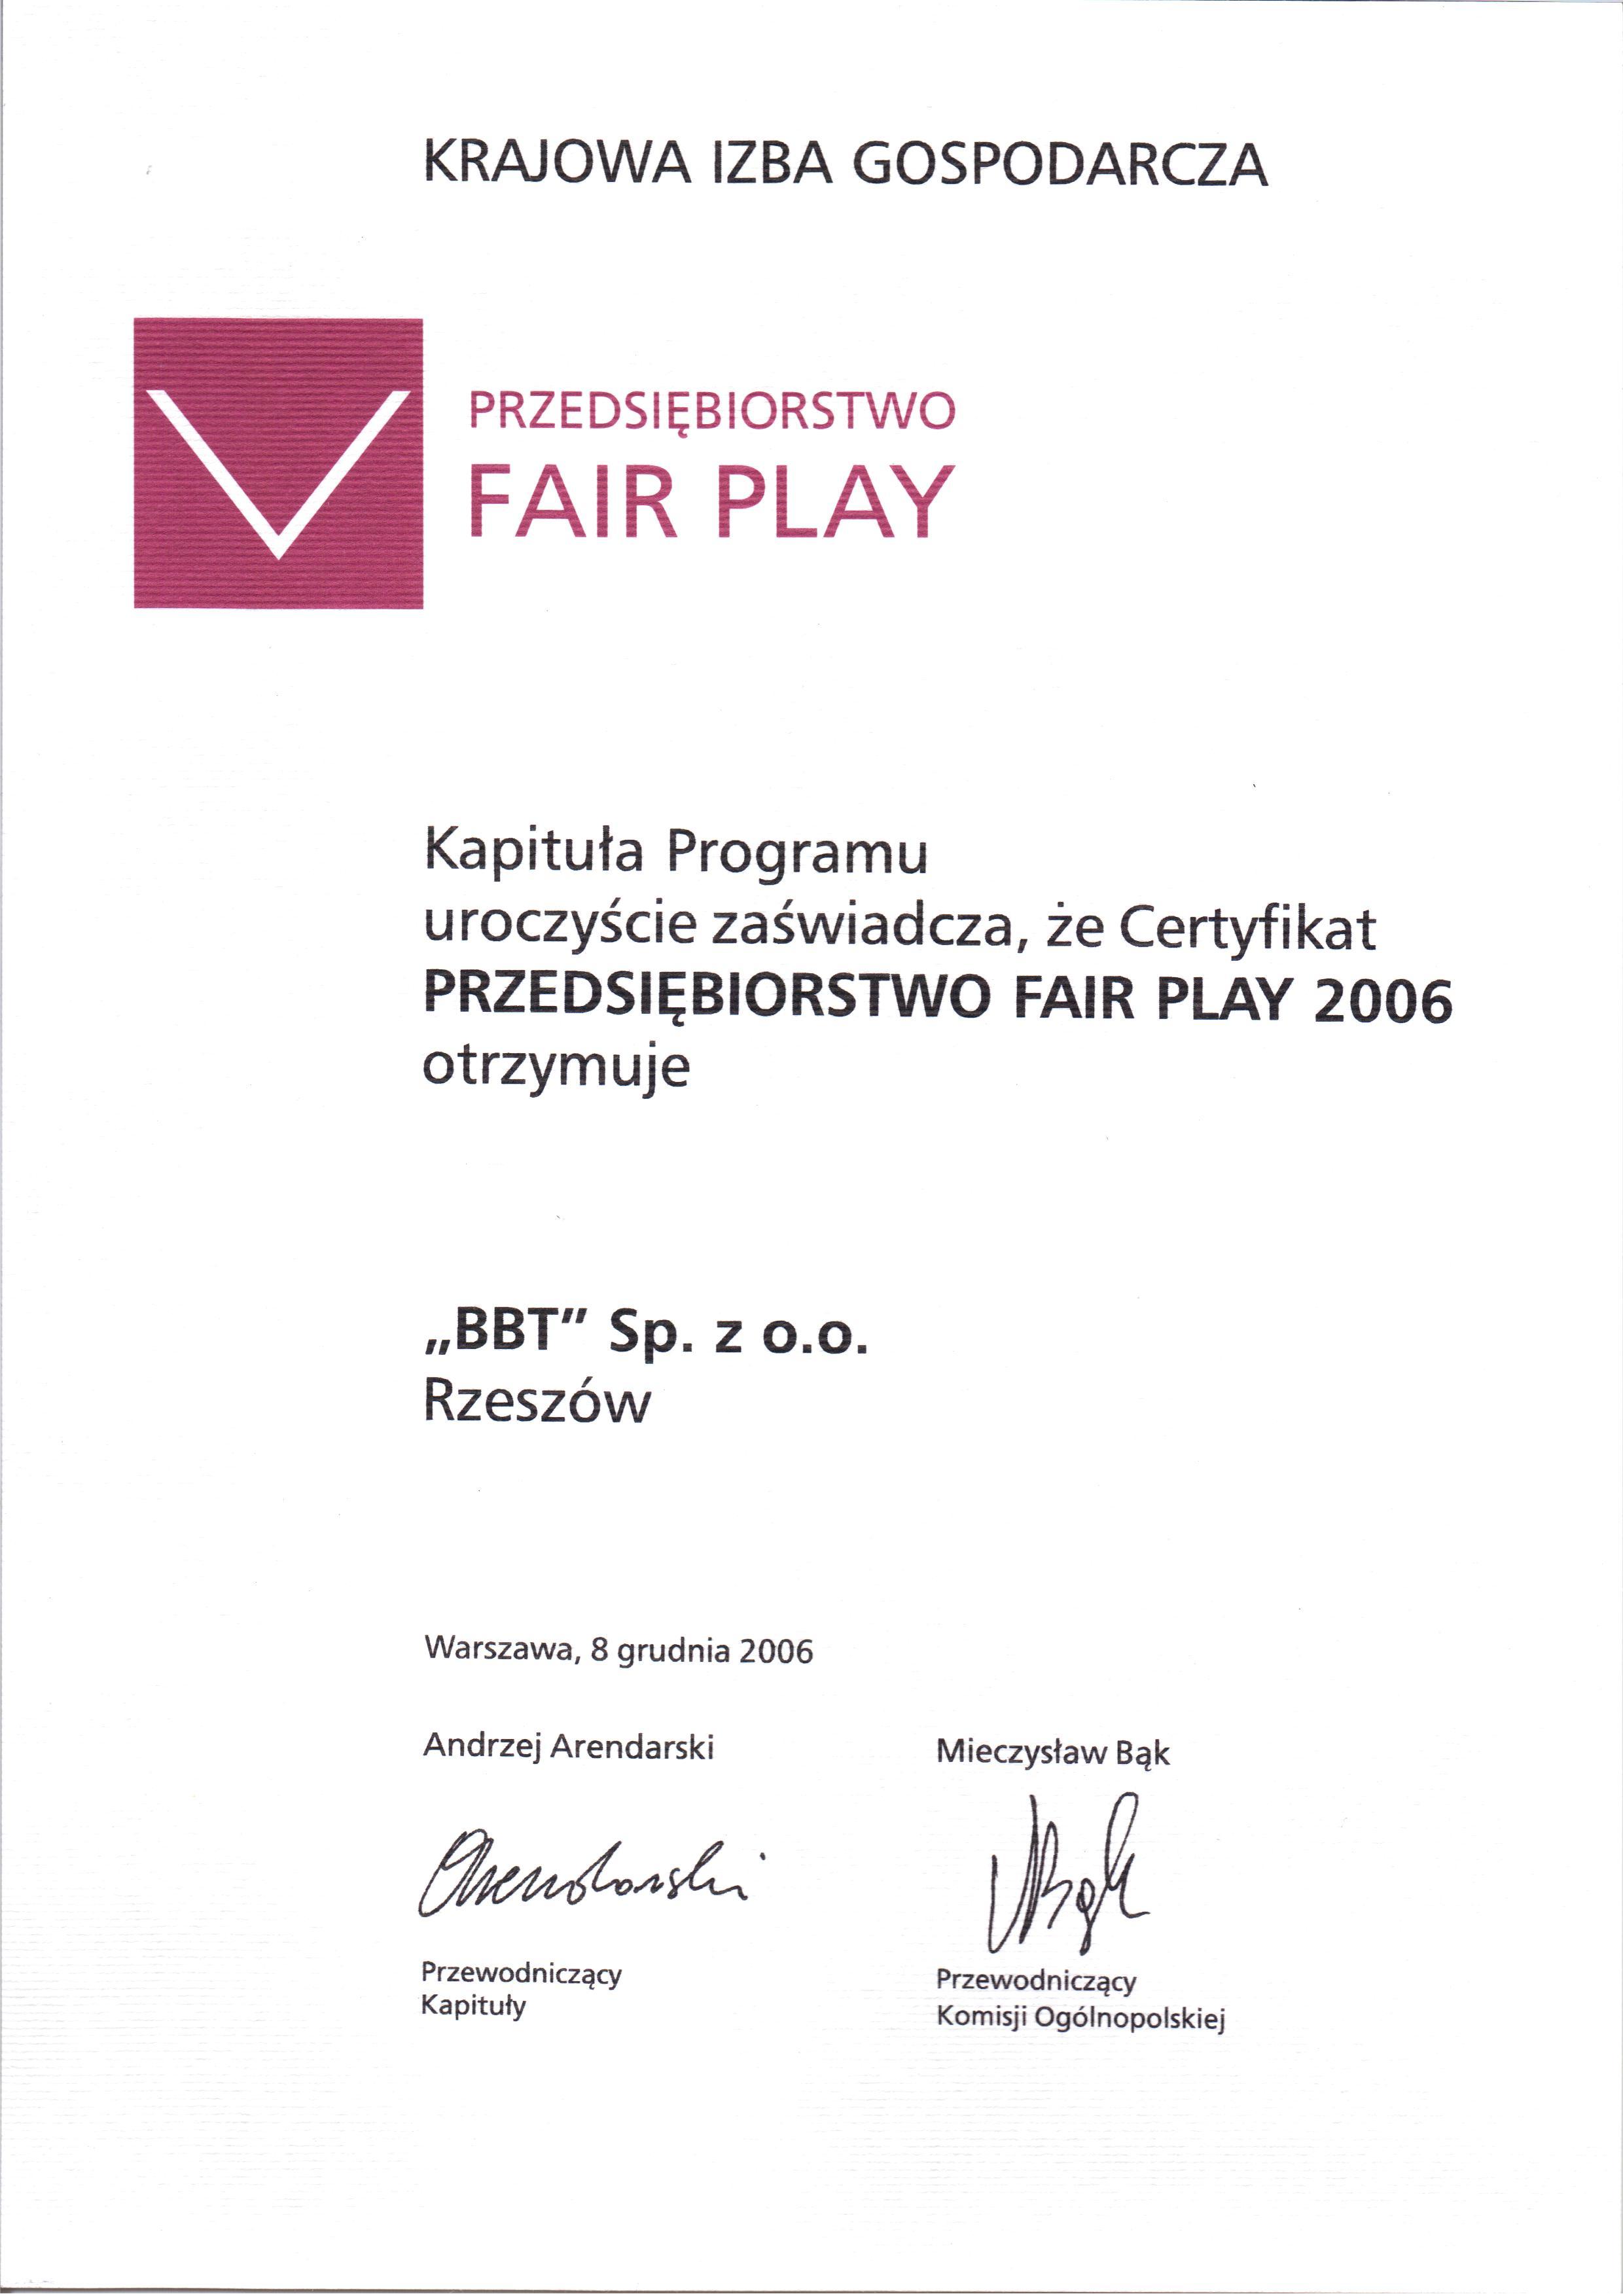 Fair Play 2006 certyfikat